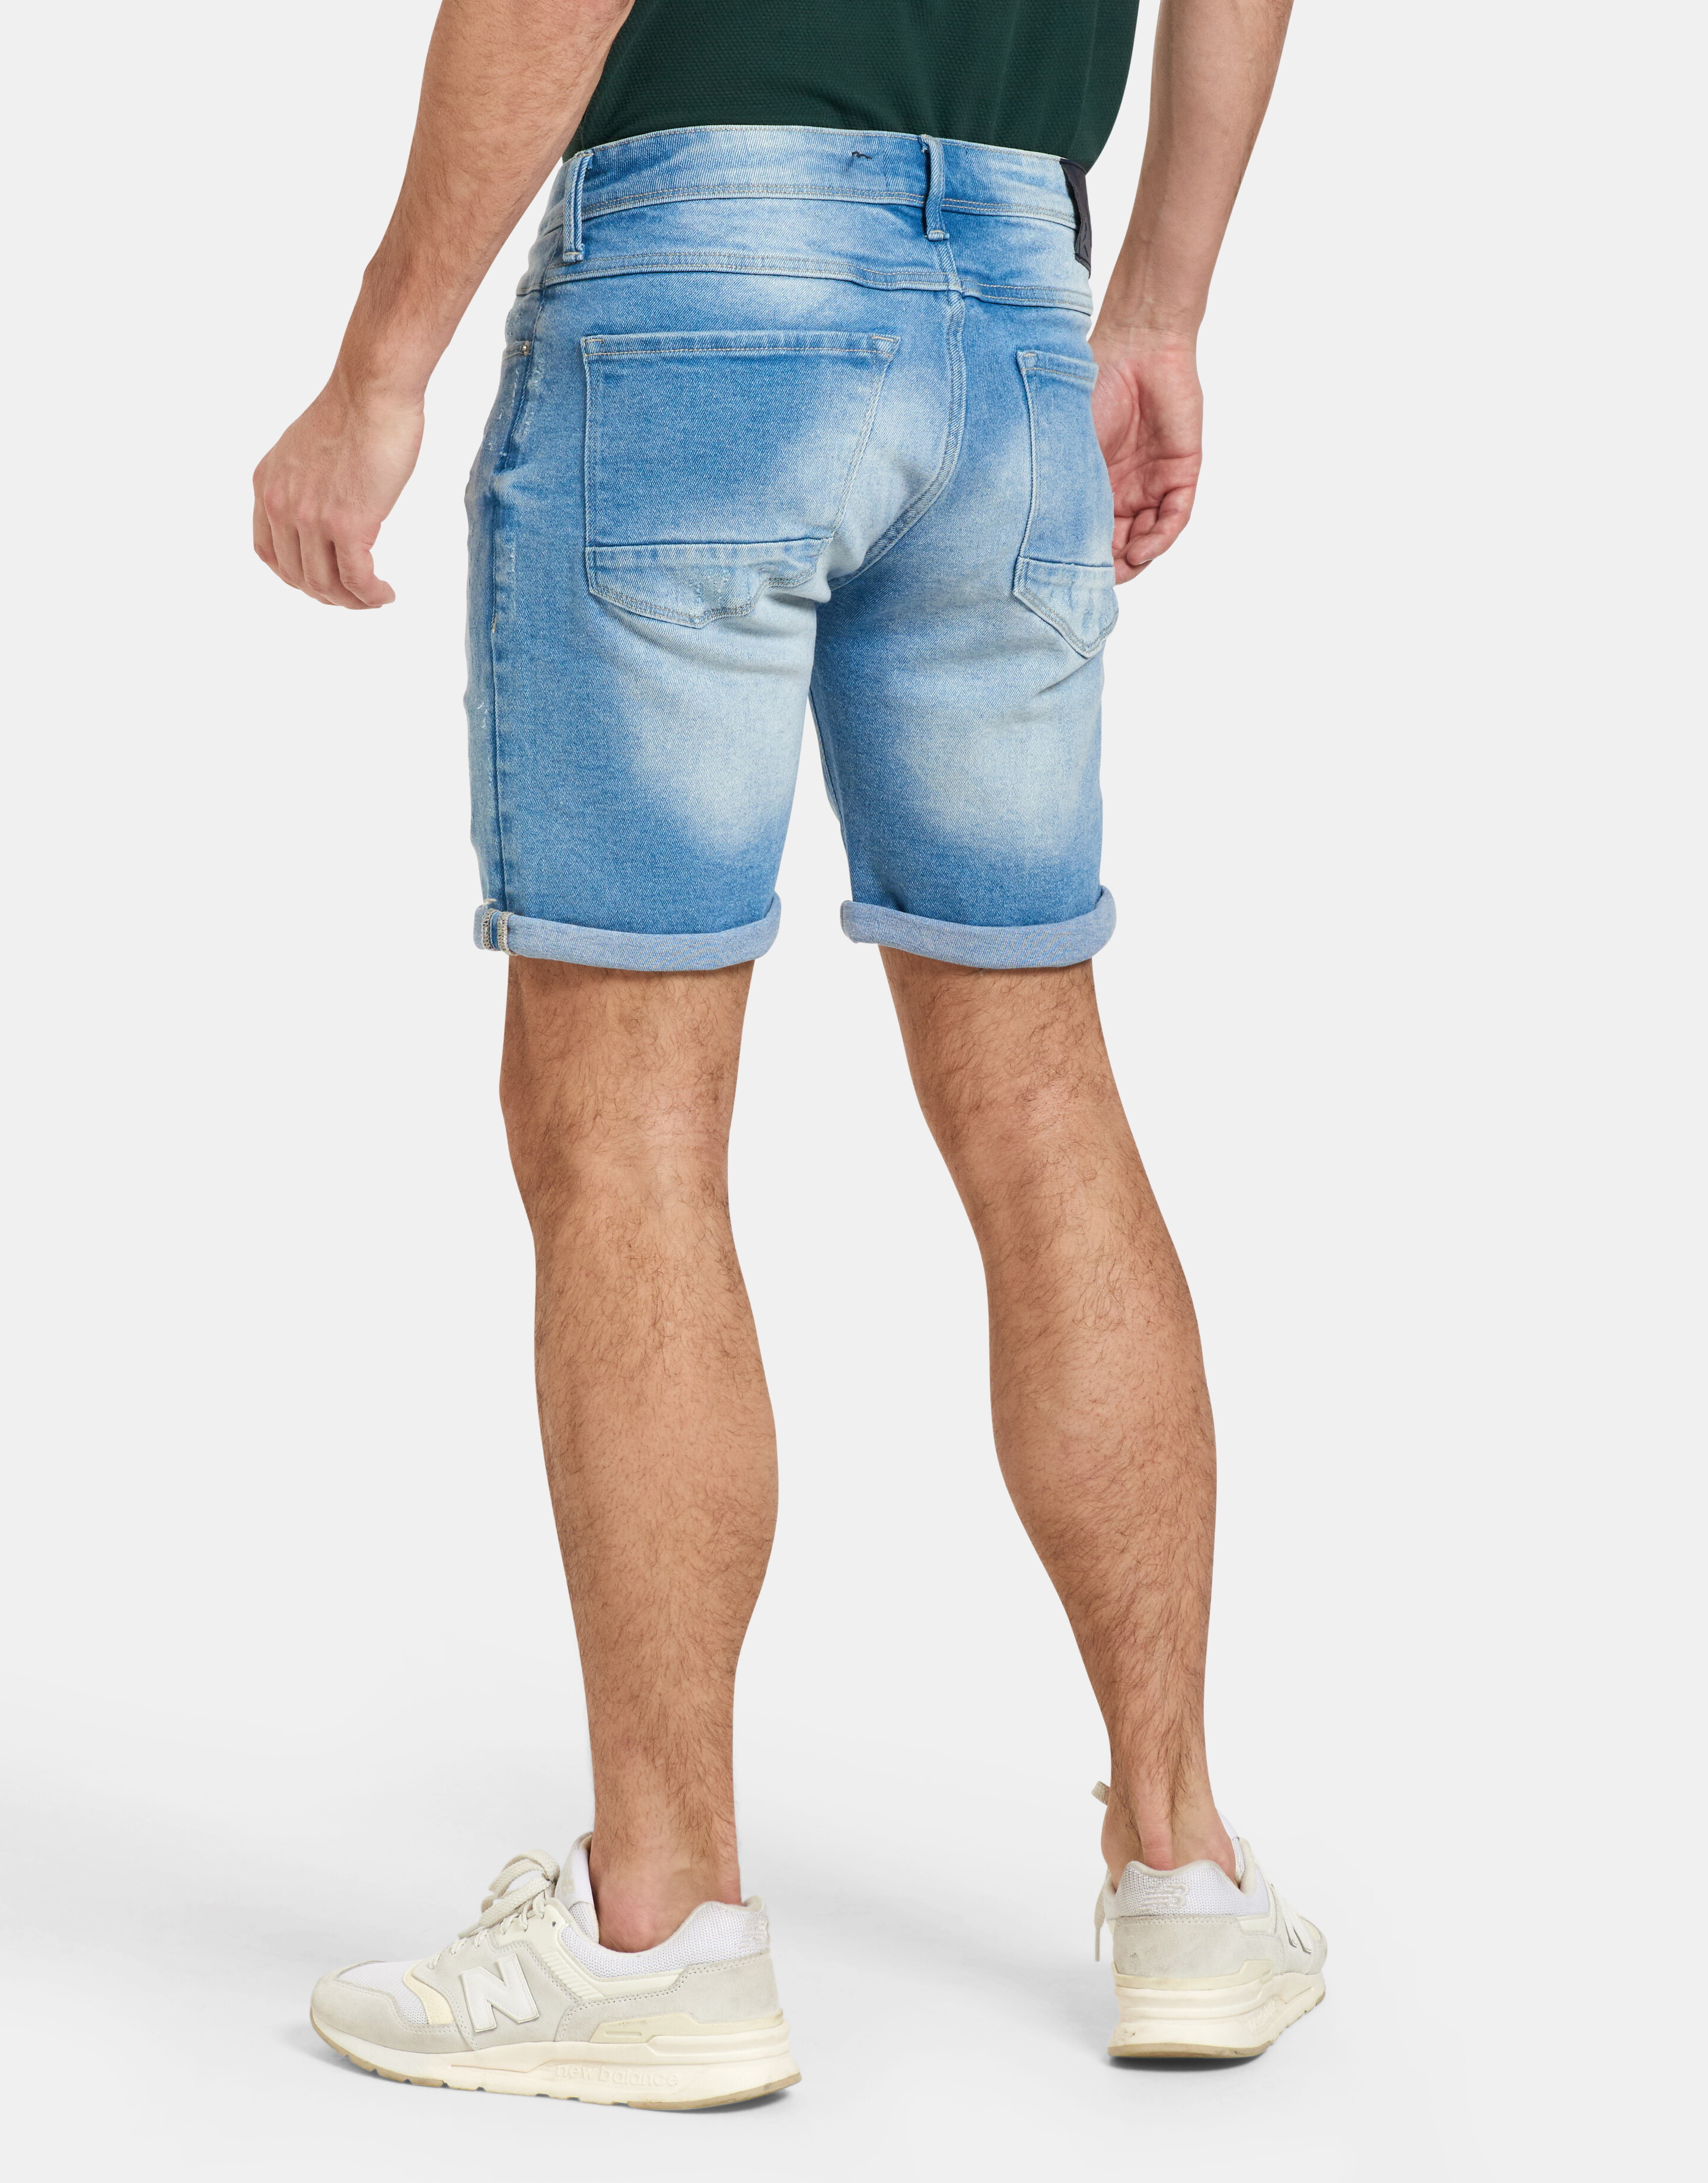 Hessel Denim Shorts | Refill